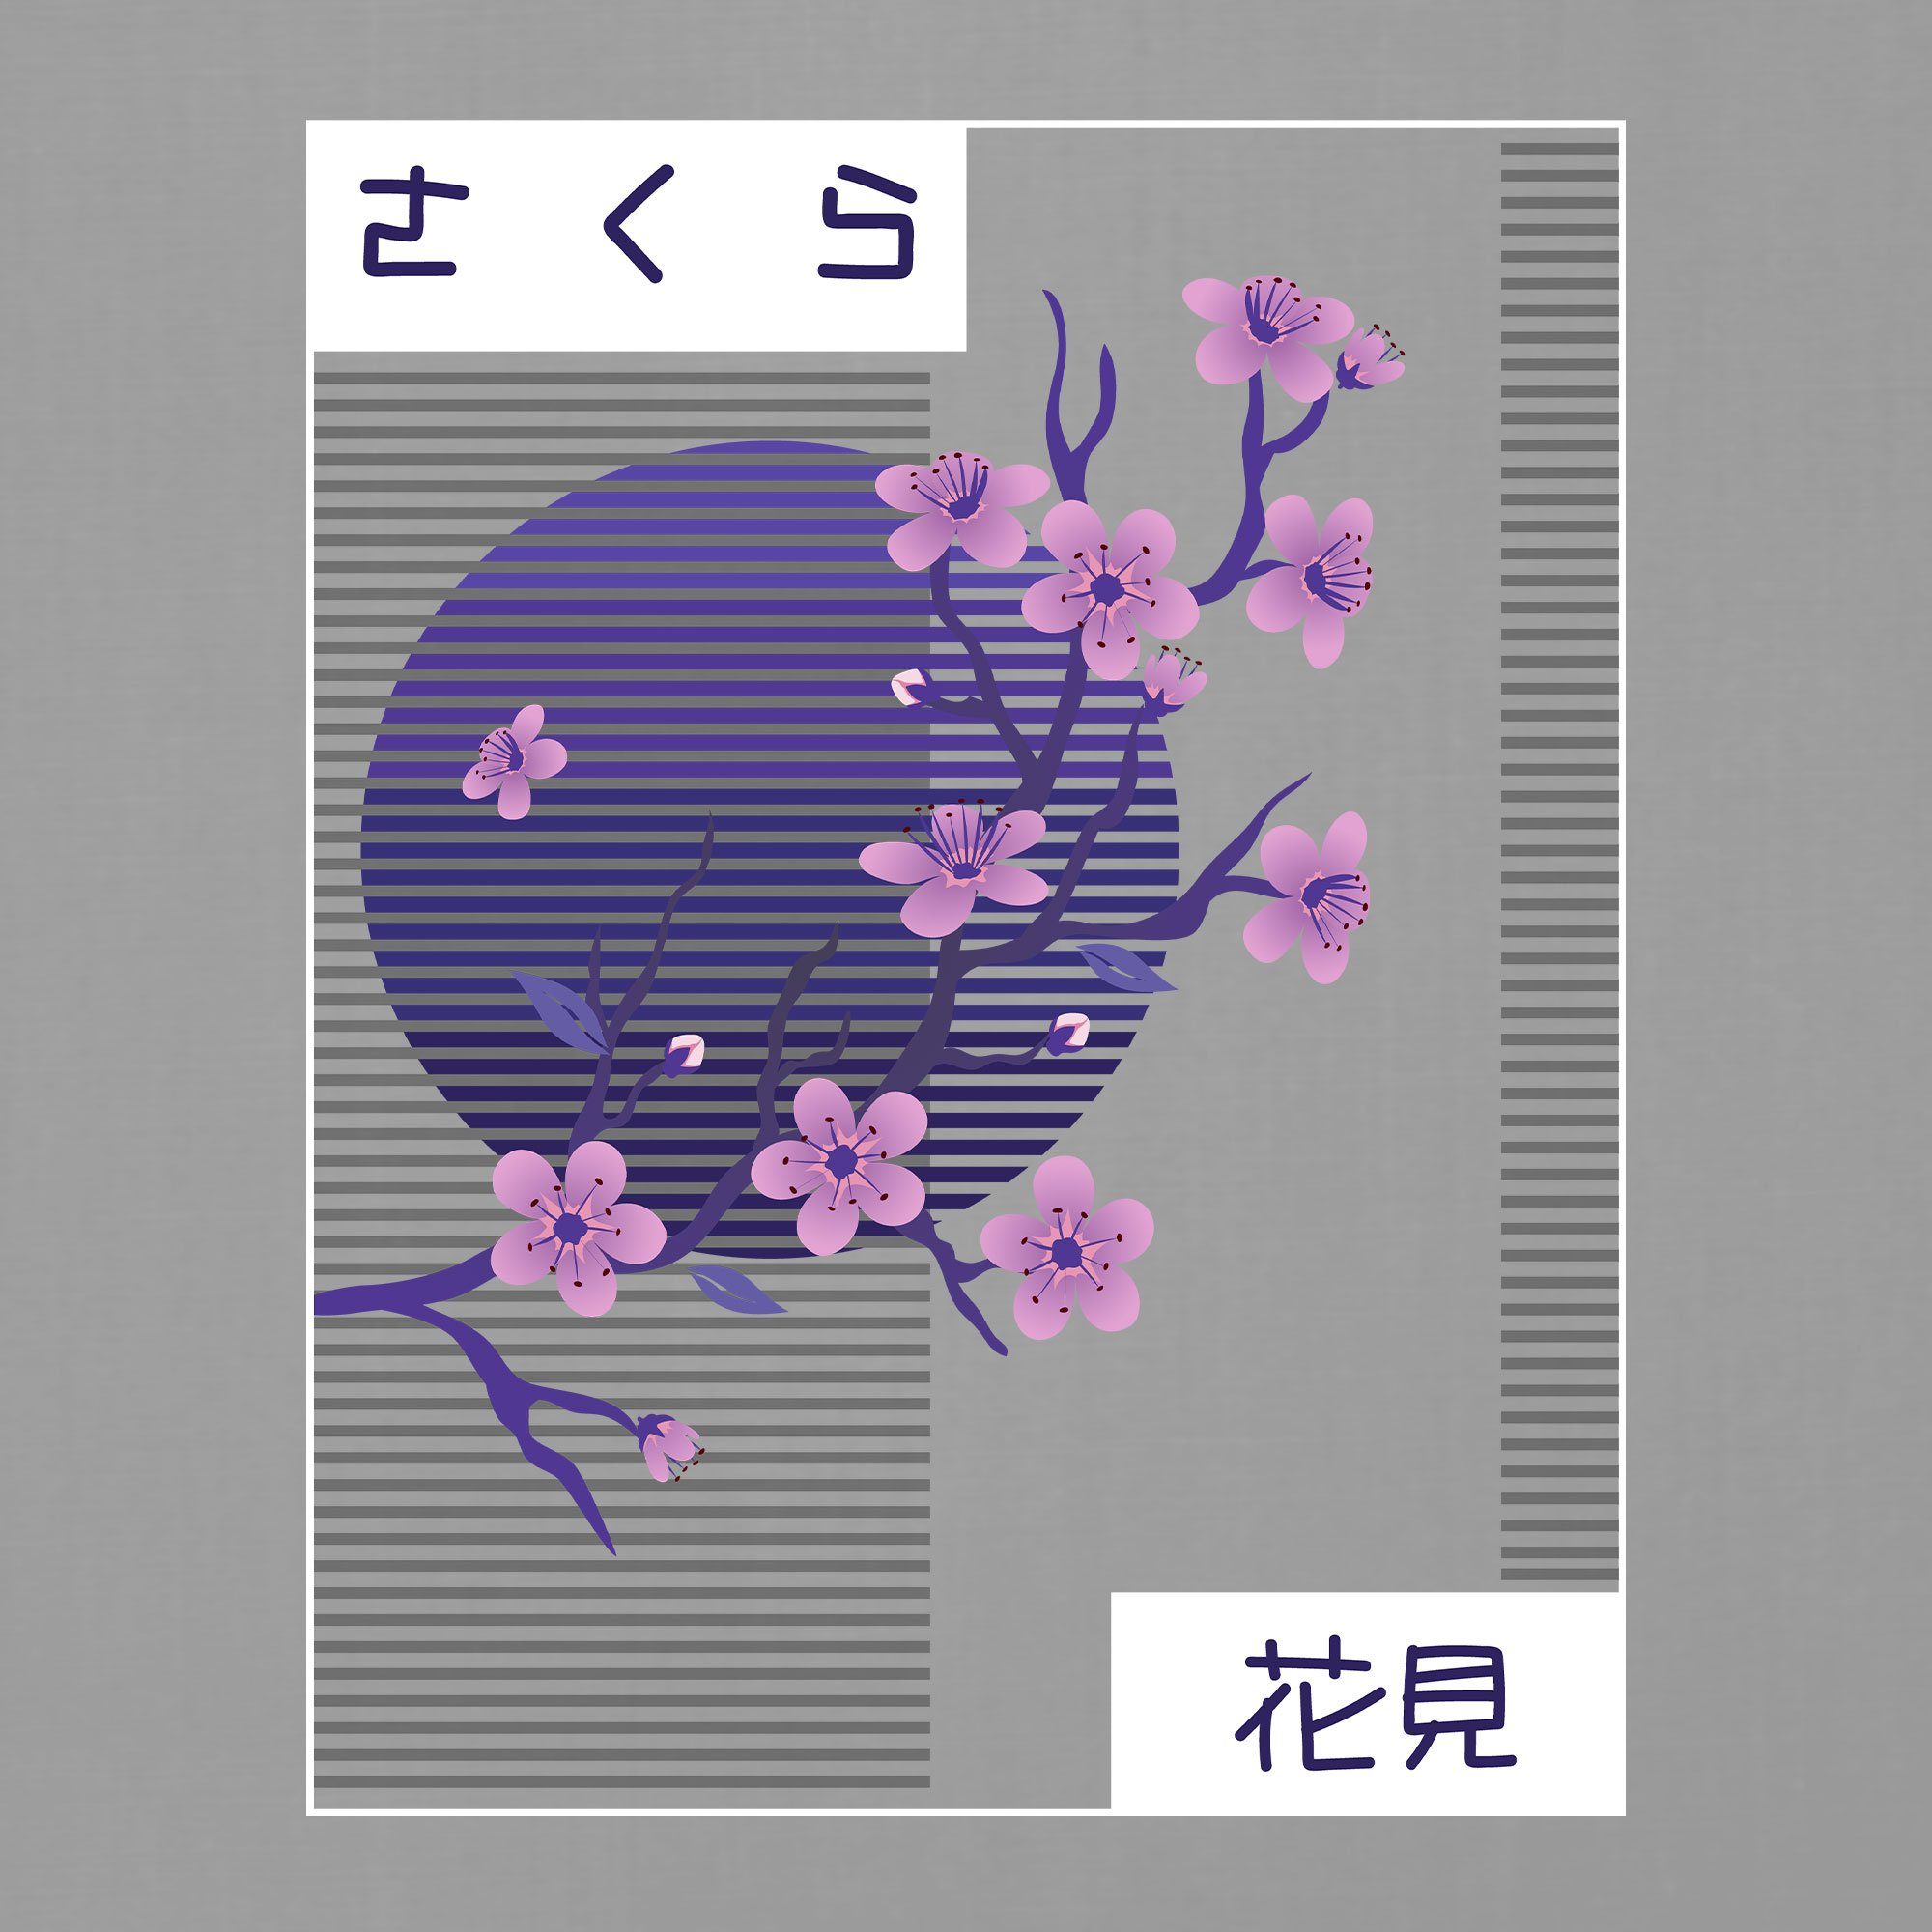 Heather T-Shirt Herren Formatee Kurzarmshirt Ästhetik Japanese Grau - Aesthetic Vaporwave Quattro (1-tlg) Cherry Blossom